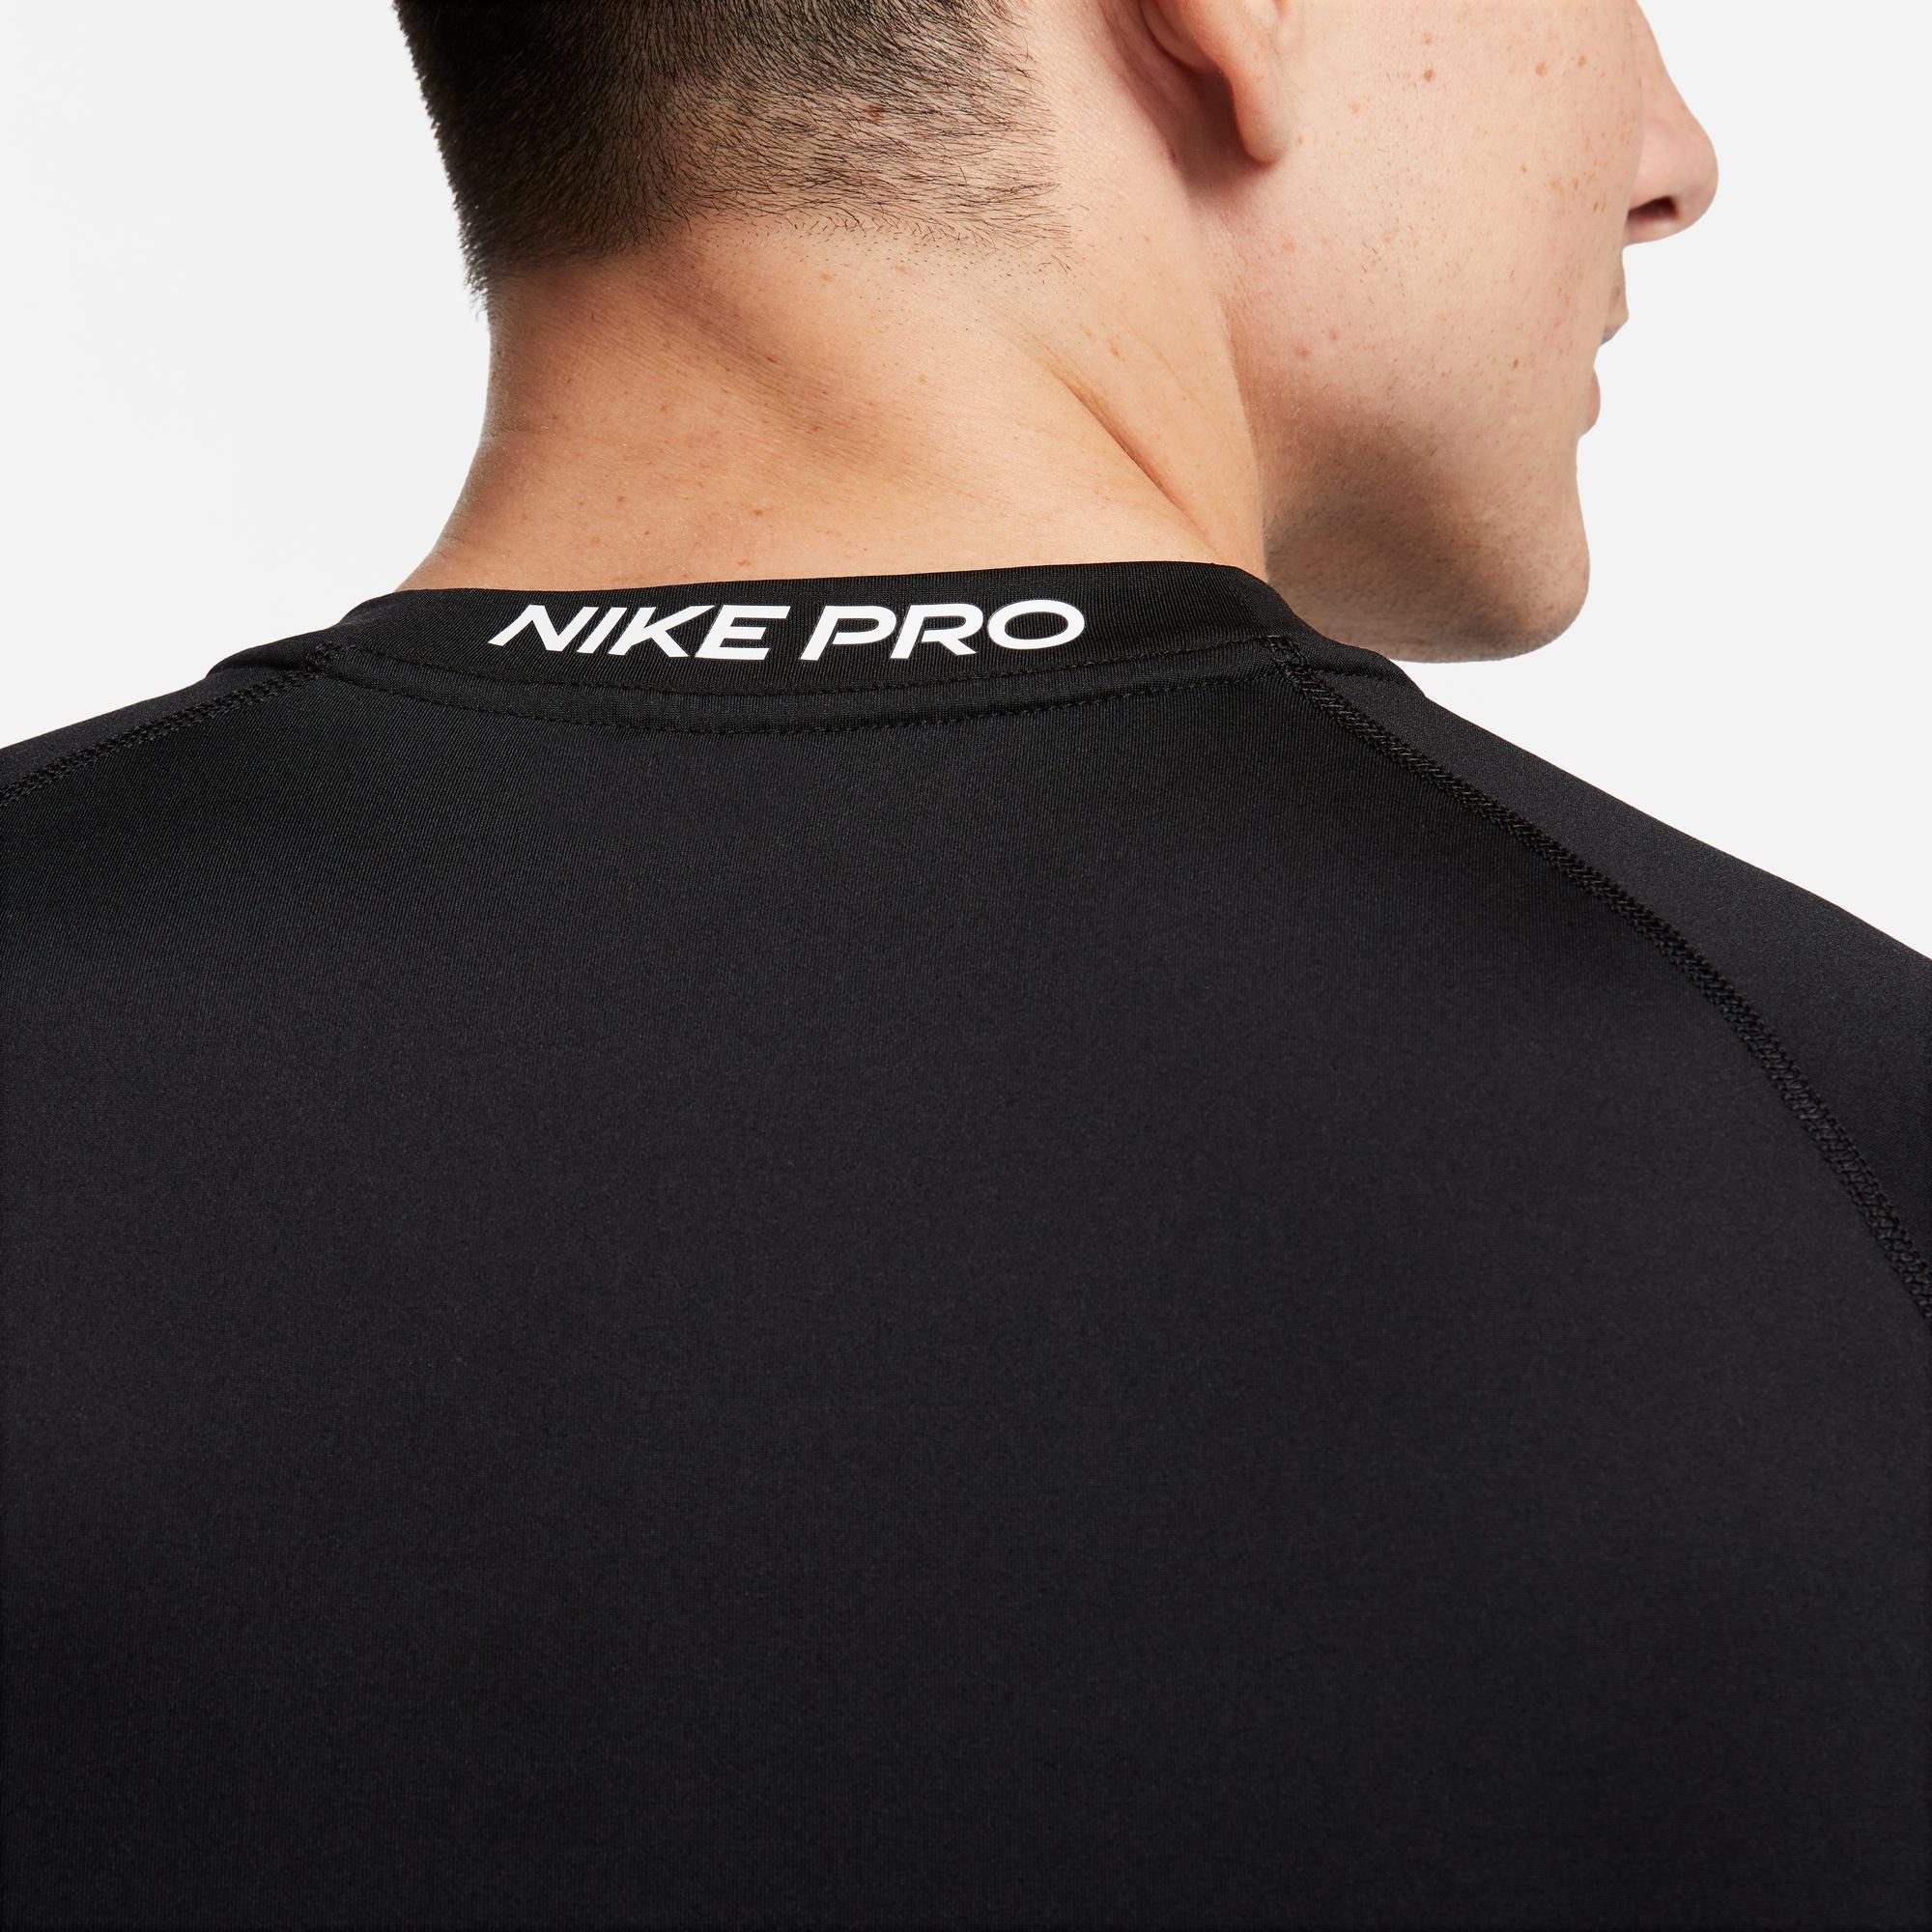 Nike SLIM DRI-FIT TOP SHORT-SLEEVE PRO Trainingsshirt MEN'S